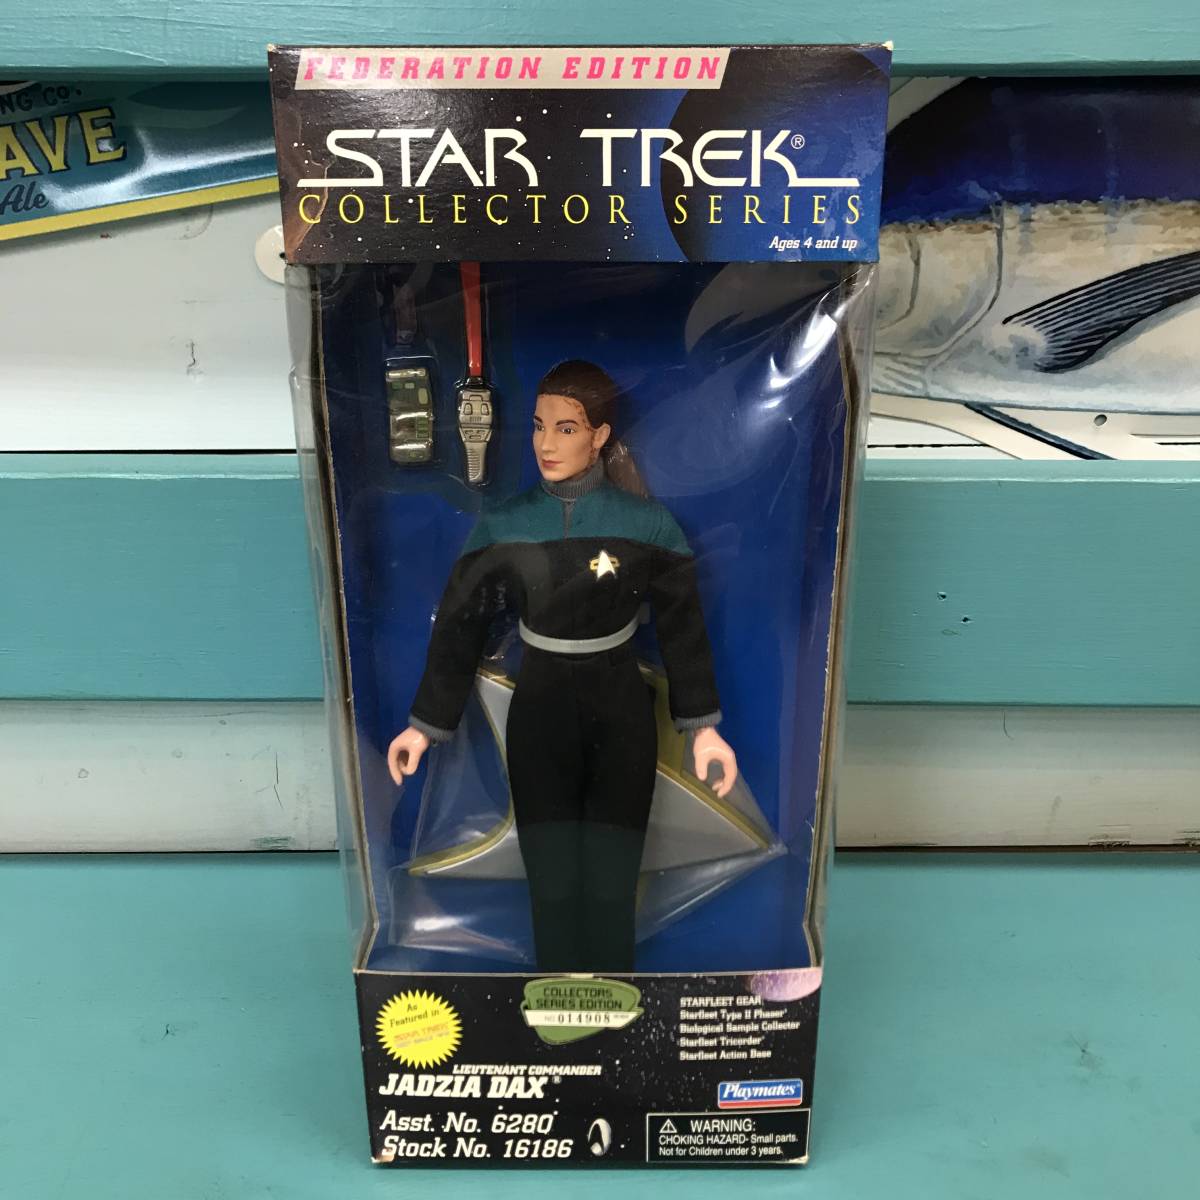 [STAR TREK* Star Trek ]JADZIA DAX figure * doll *Playmates*SF SciFi*Collectors Series* collector series 